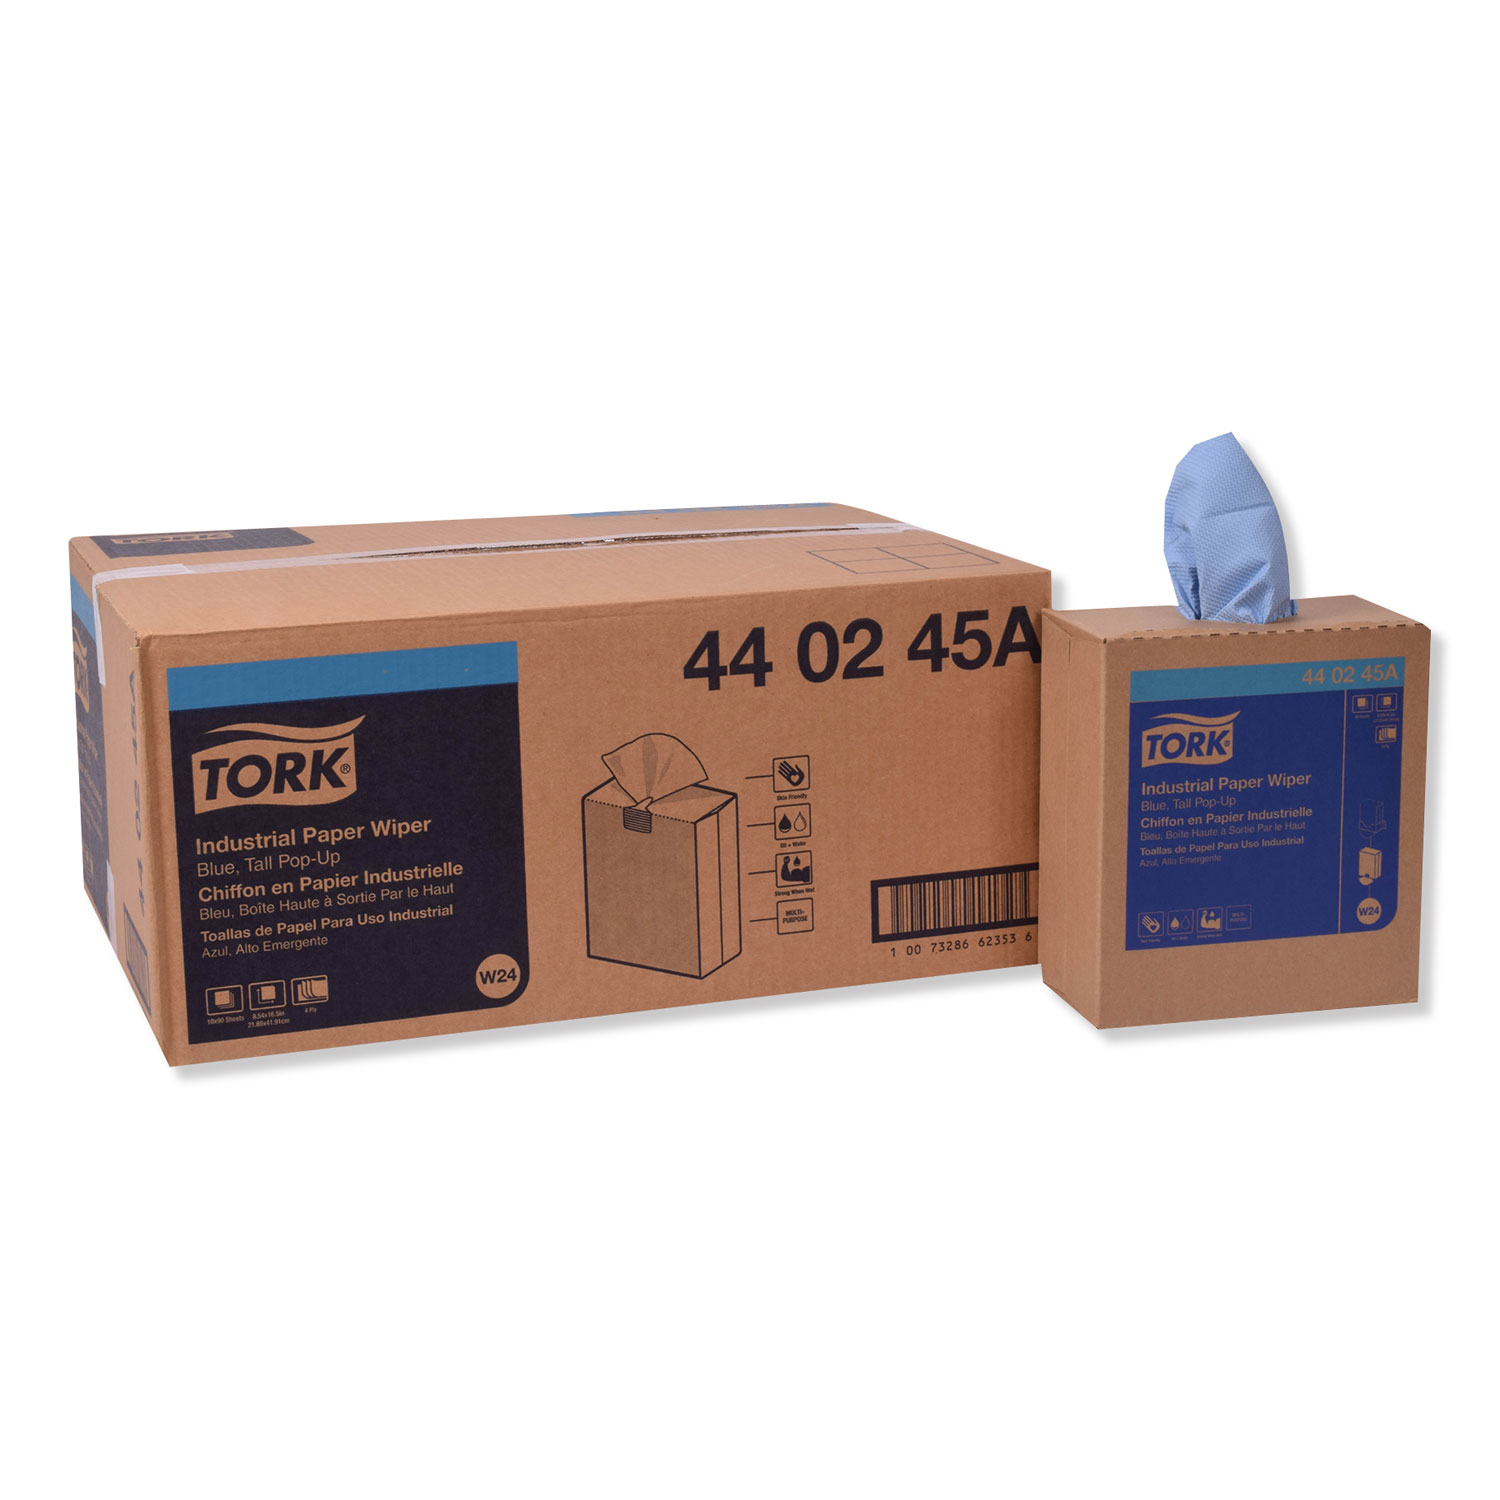  Tork 440245A Industrial Paper Wiper, 4-Ply, 8.54 x 16.5, Blue, 90 Towels/Box, 10 Box/Carton (TRK440245A) 